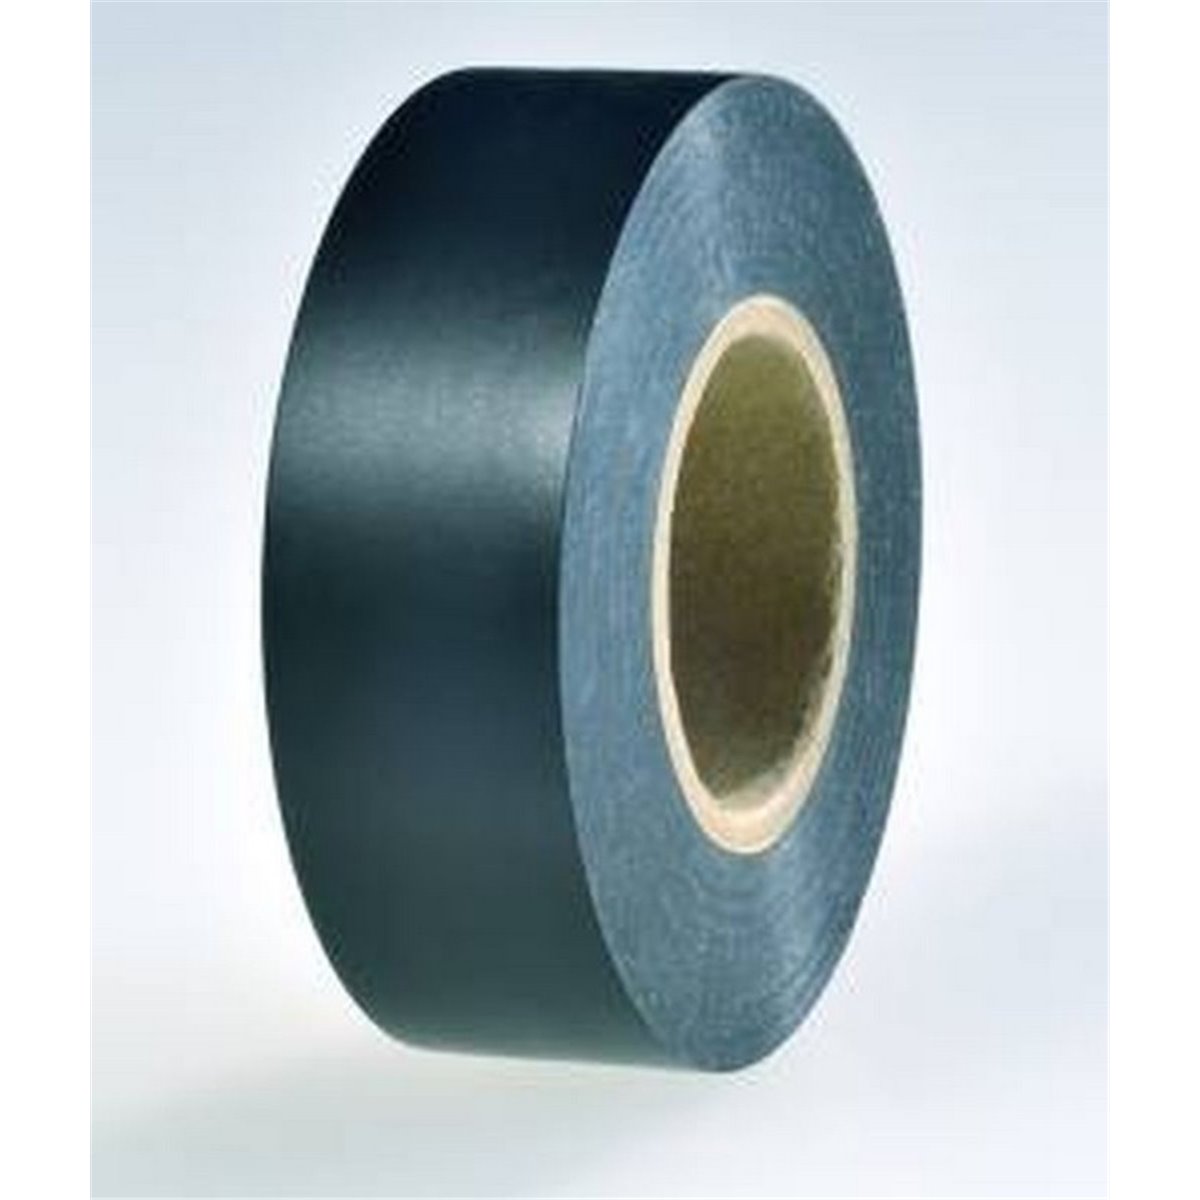 PVC Electrical insulation tape HelaTape Flex 1000 HTAPE-1000BK-19X20 HellermannTyton